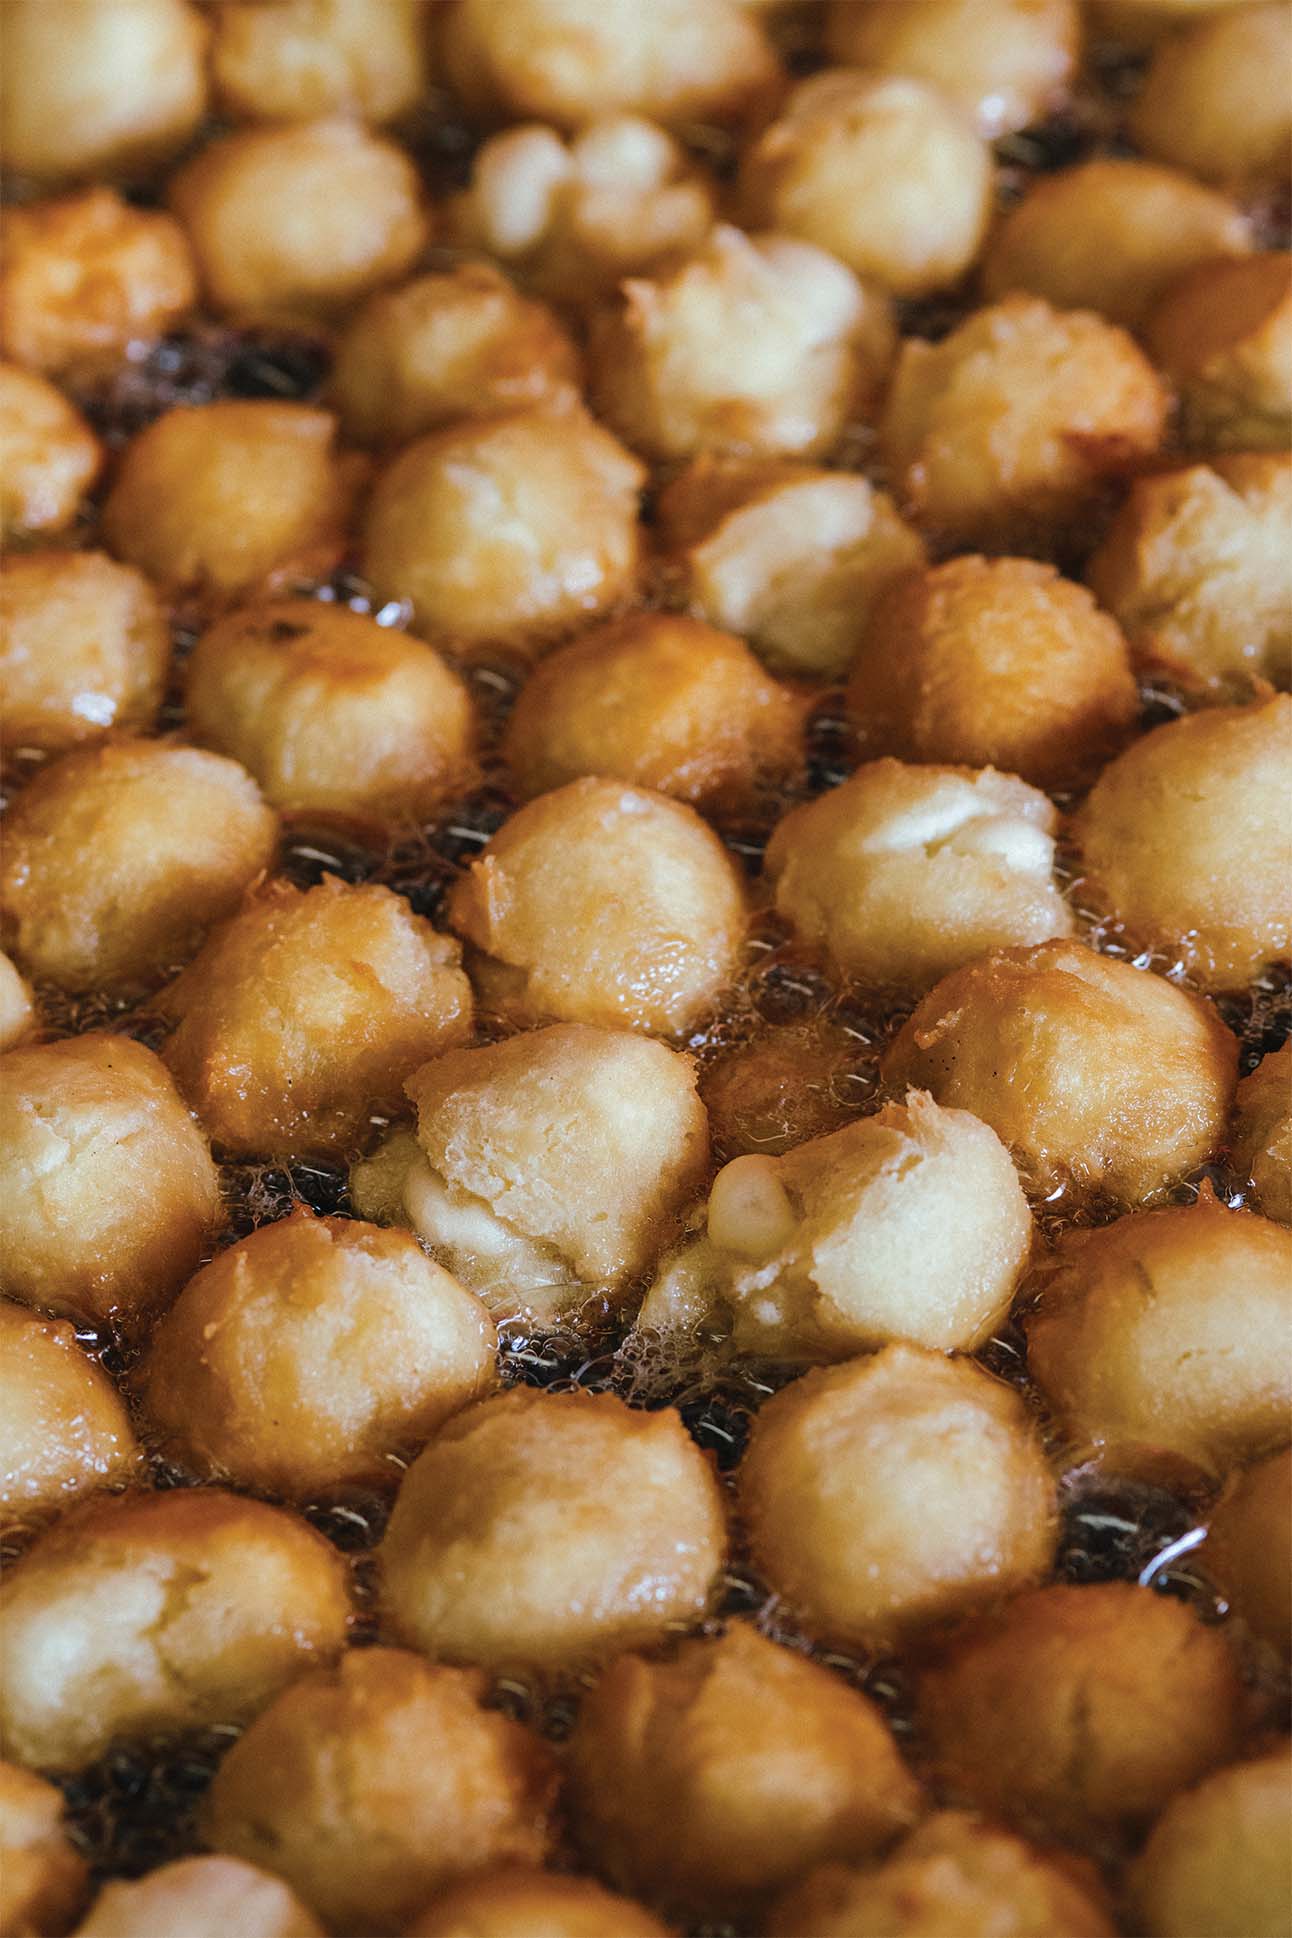 Close up of golden brown dough balls being deep-fried in hot oil.